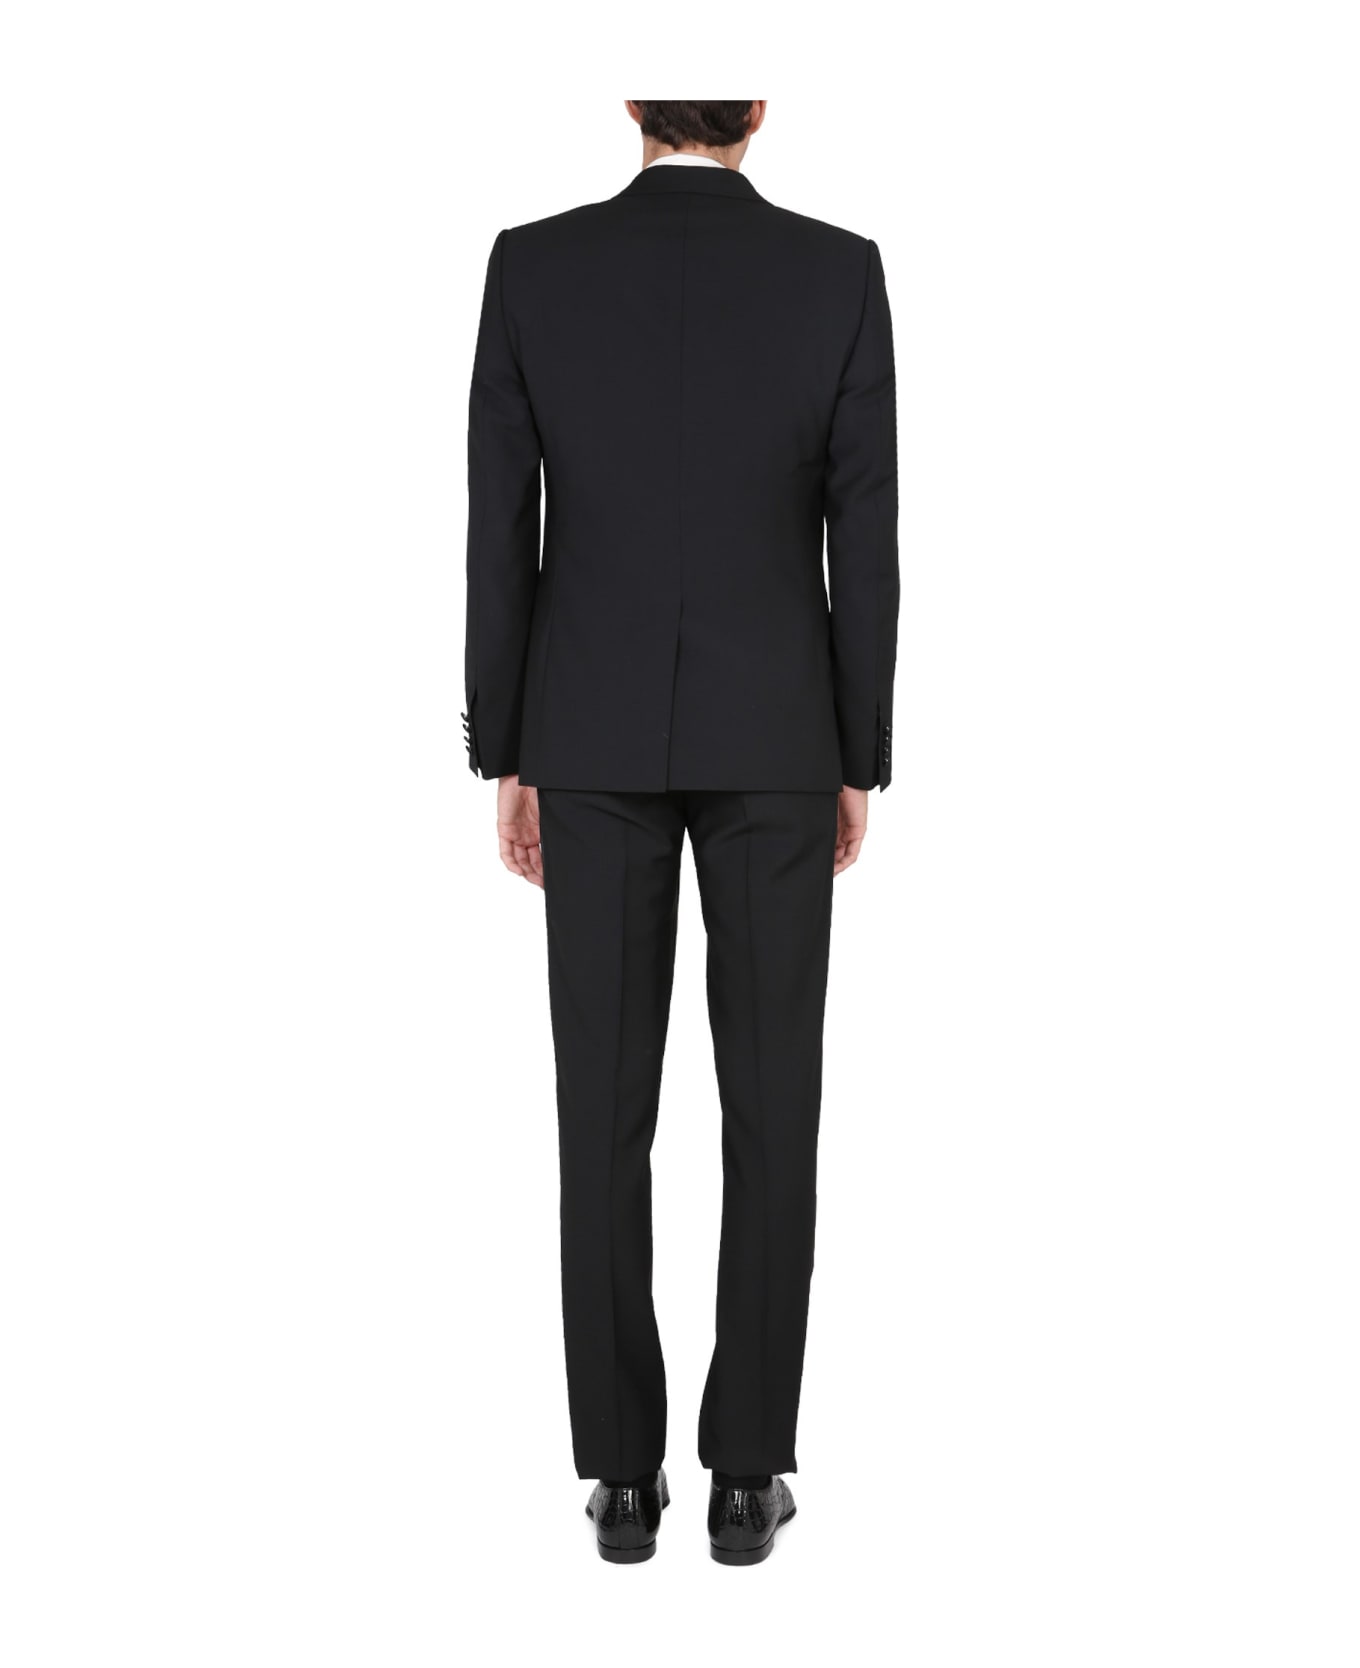 Dolce Seul & Gabbana Martini Tuxedo Suit - NERO